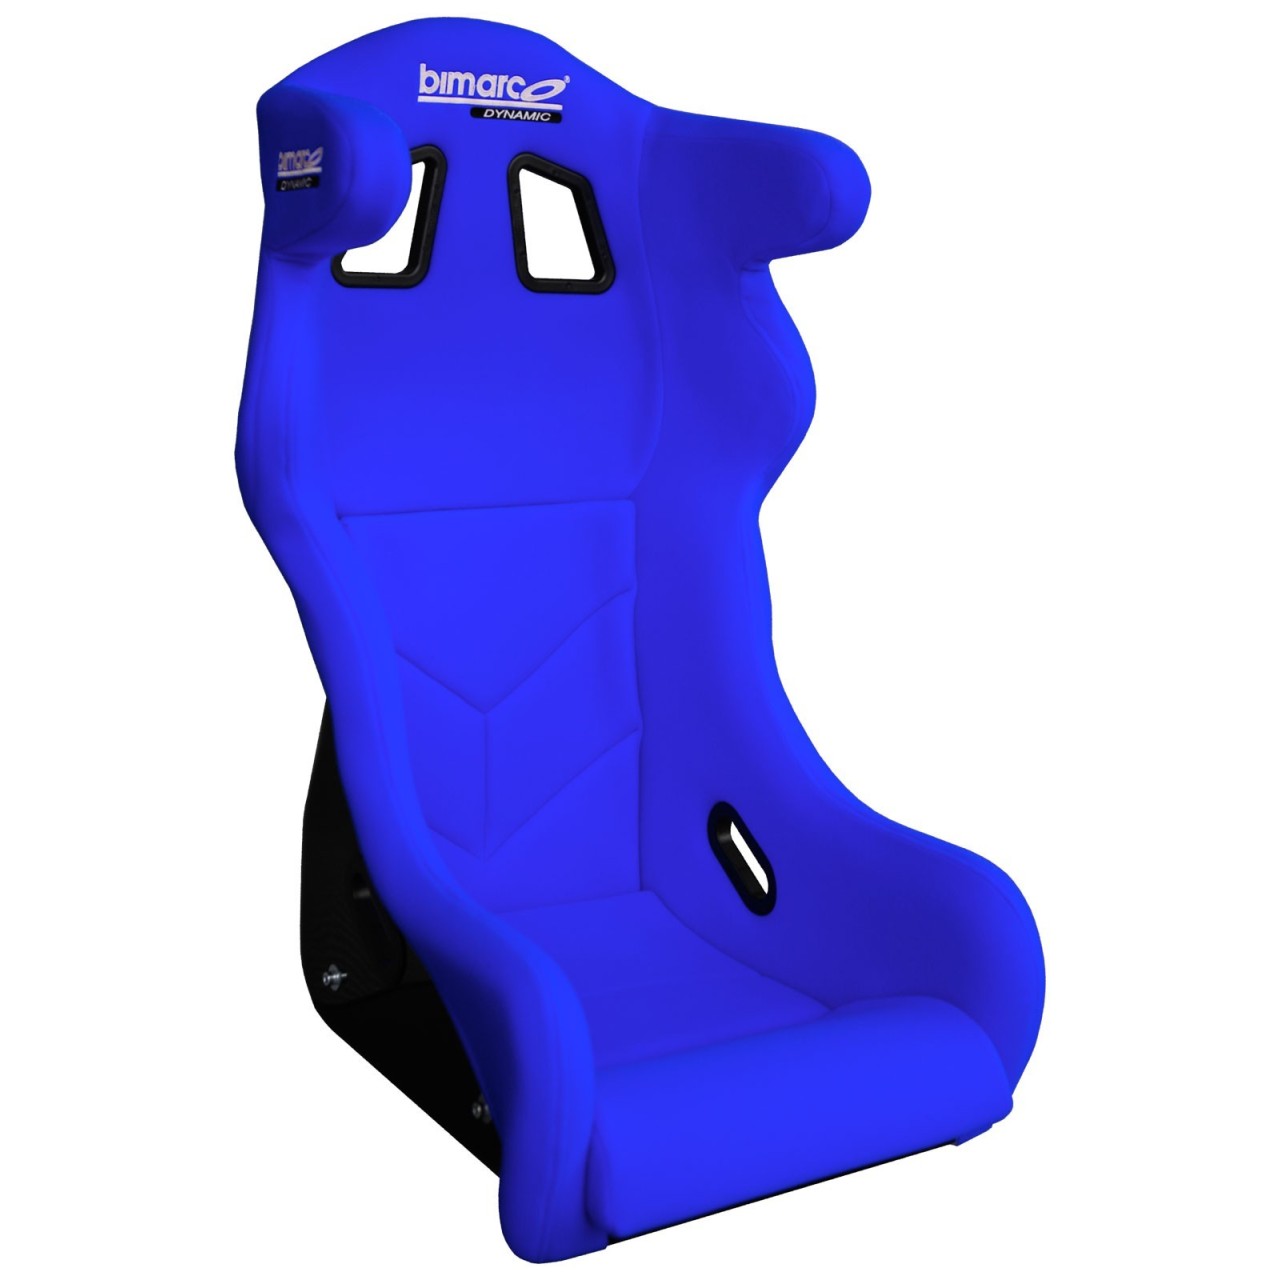 Bimarco Dynamic BLUE / 3D MESH bucket seat